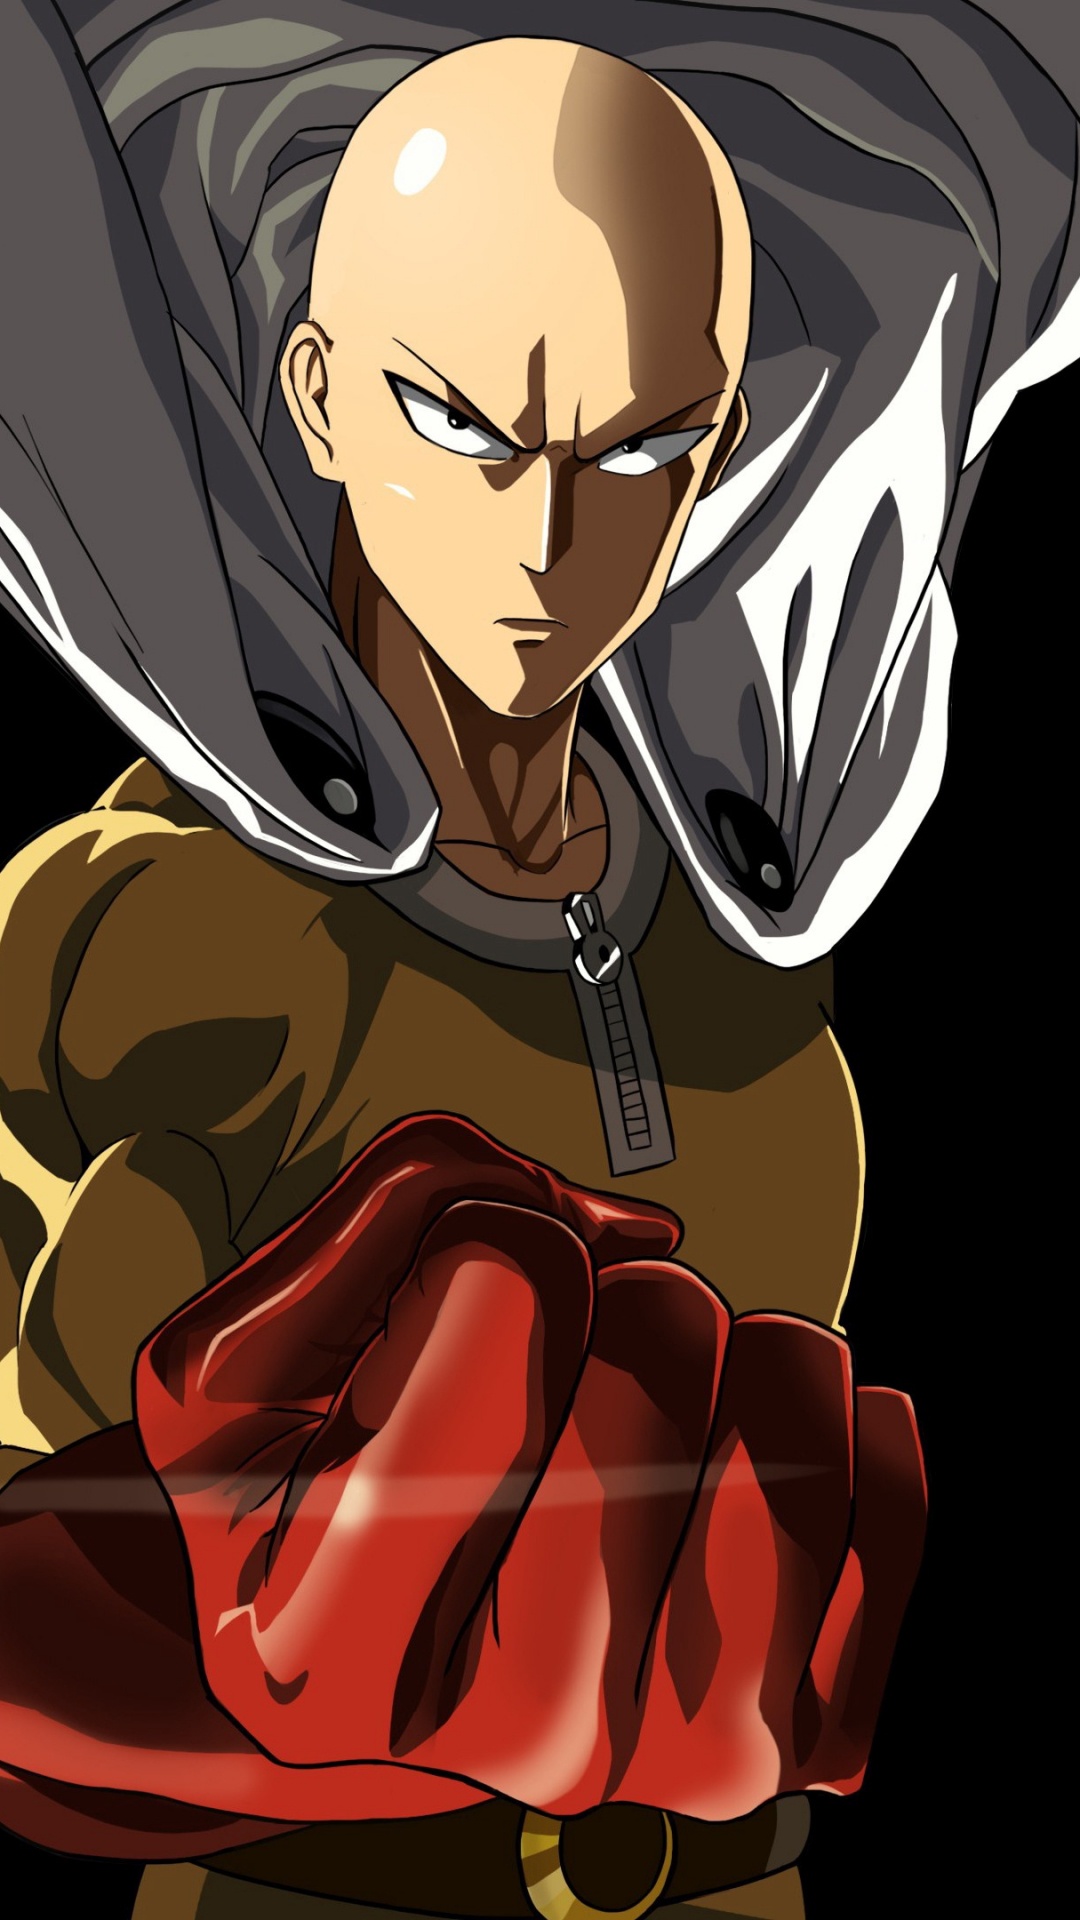 Personaje de Anime Masculino de Pelo Azul. Wallpaper in 1080x1920 Resolution